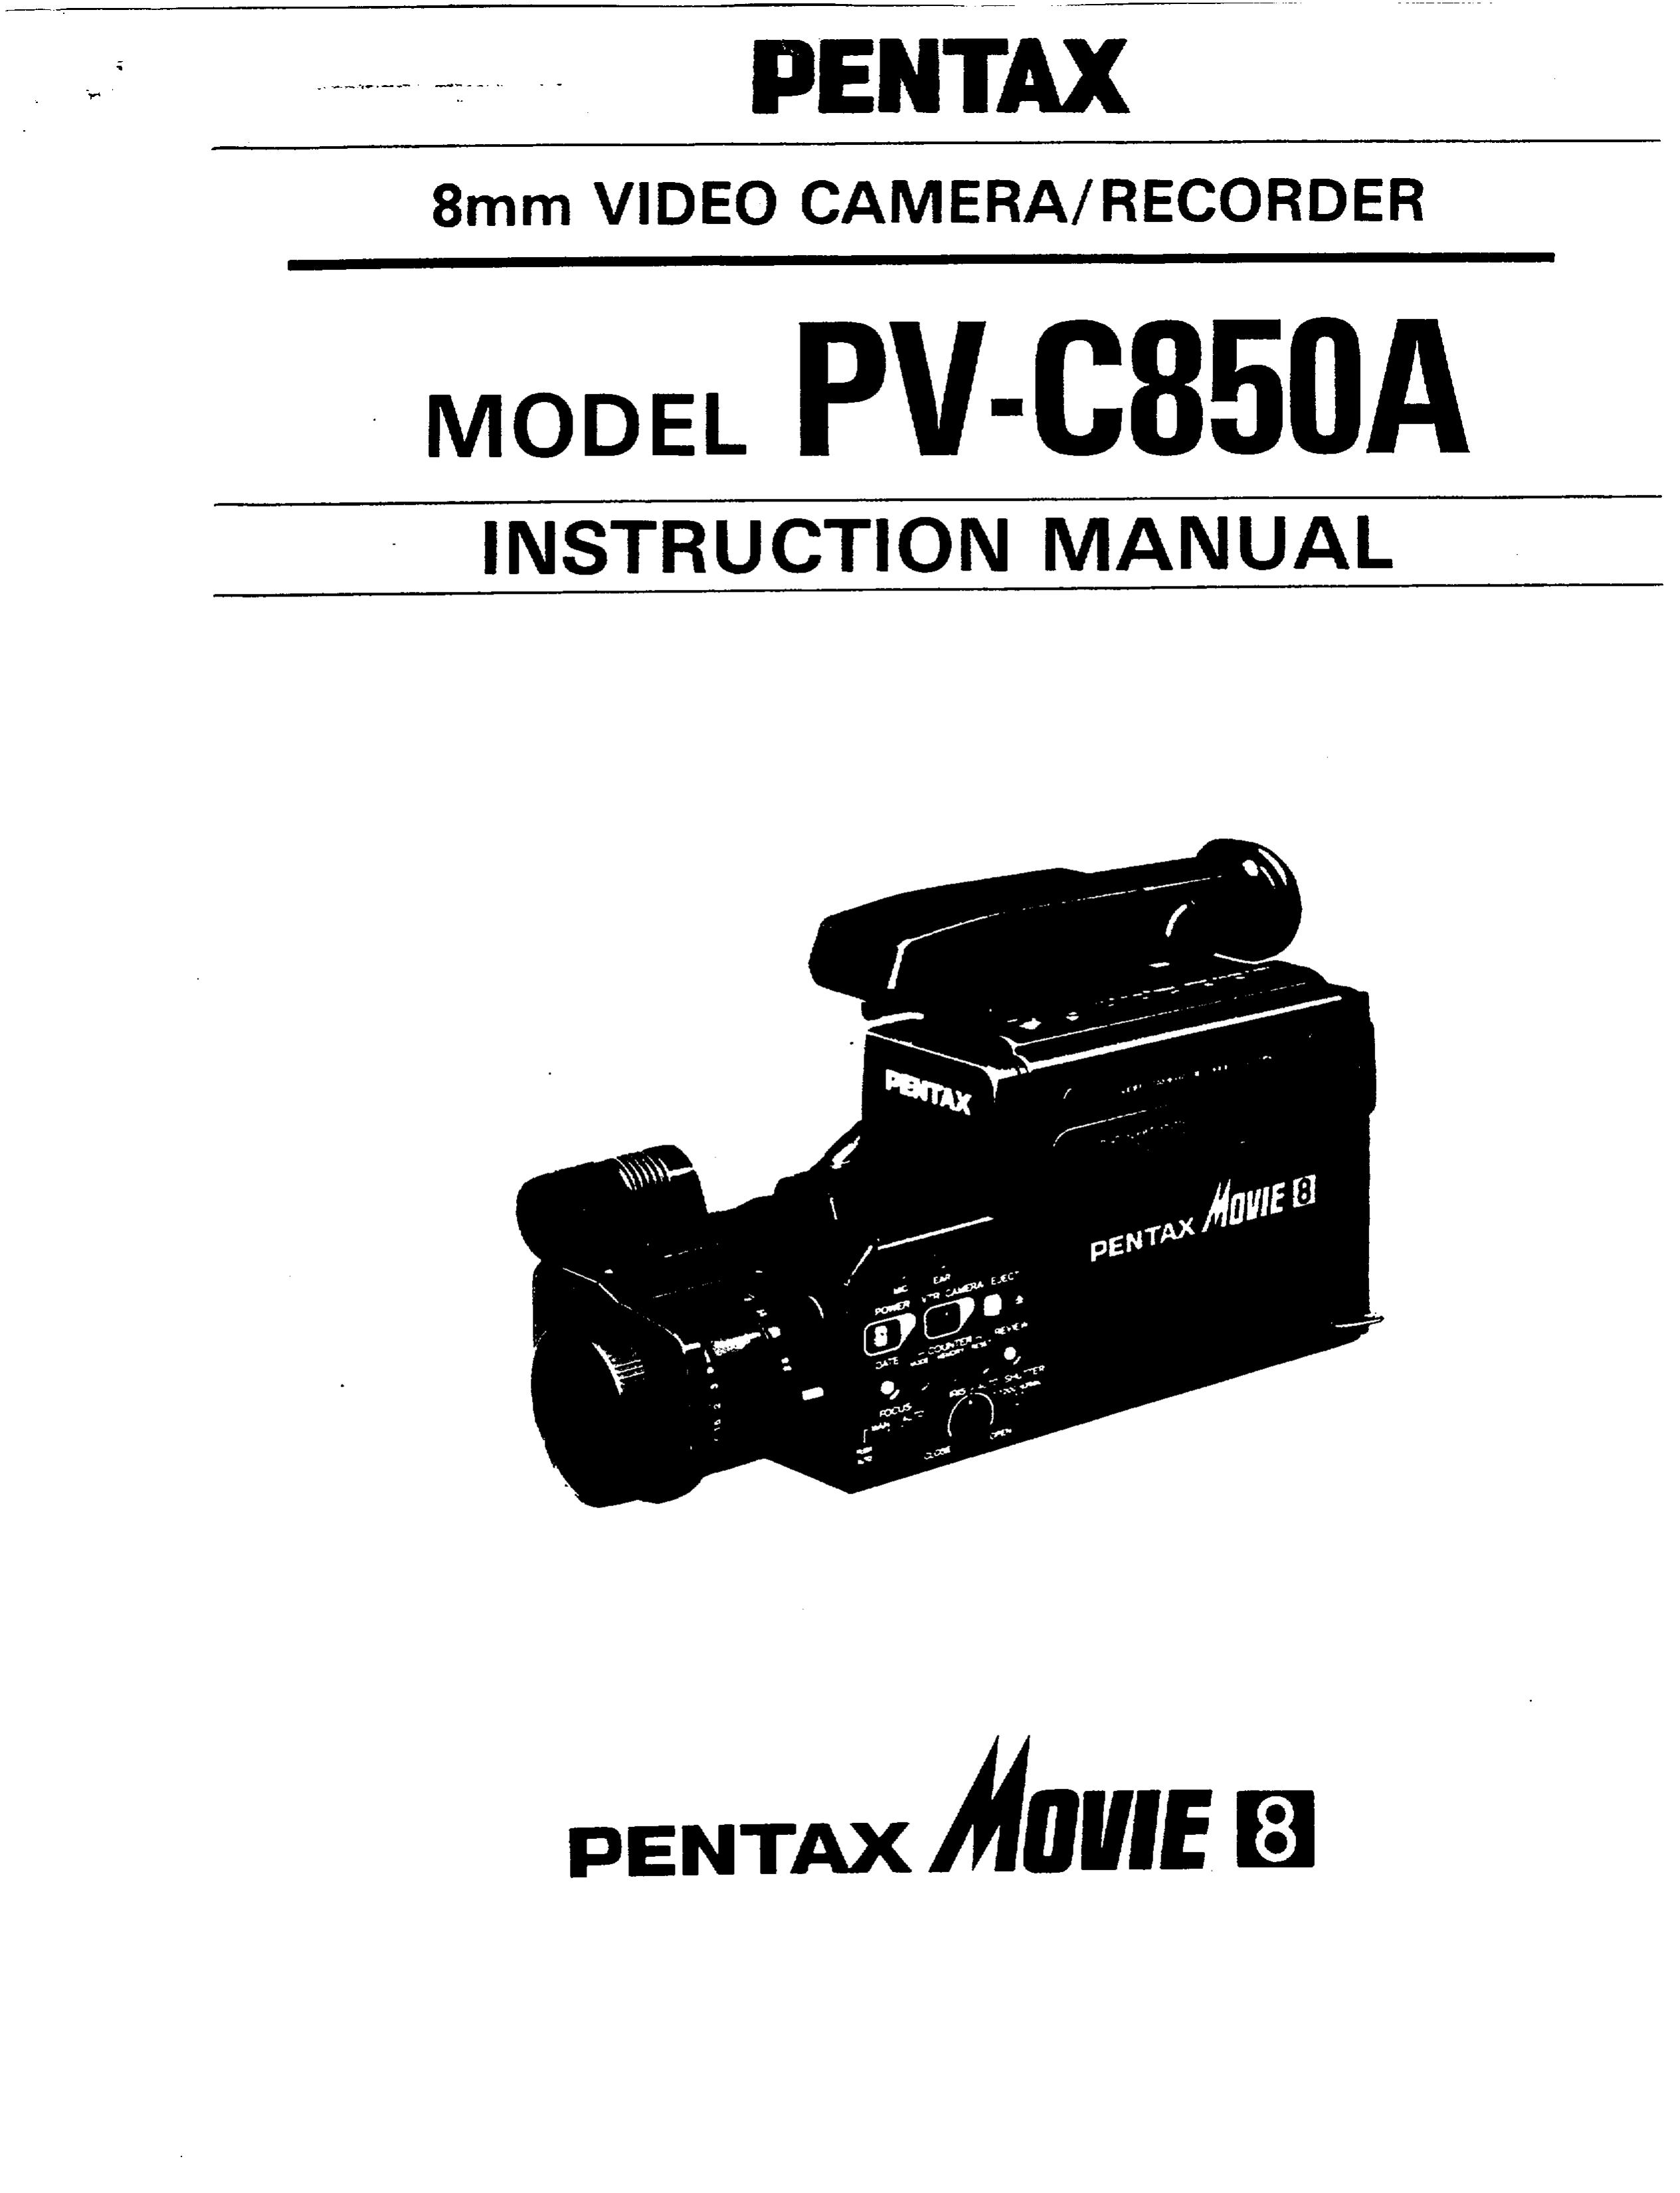 Pentax PV-C850A Camcorder User Manual